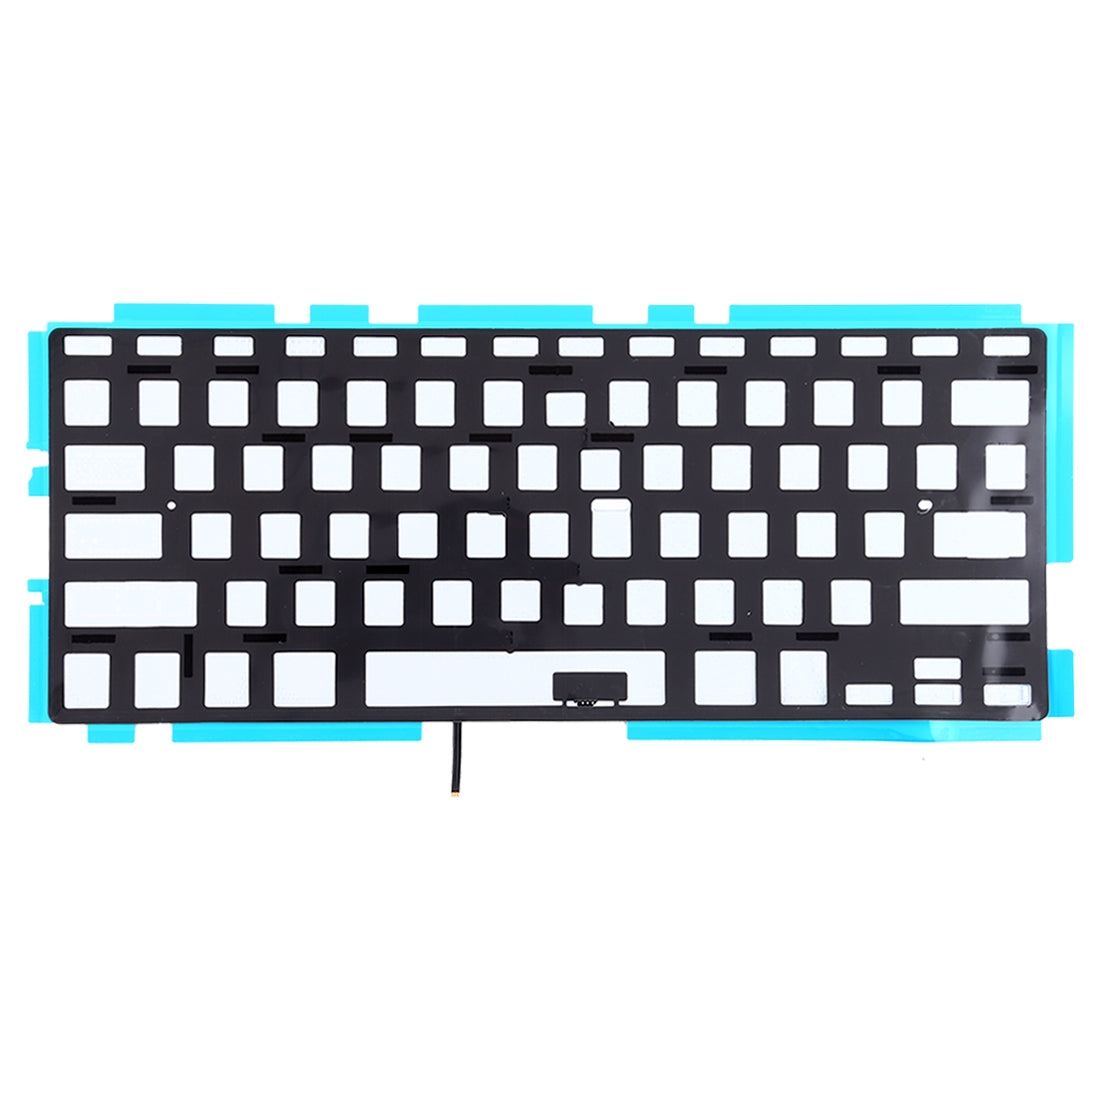 Backlight Keyboard US Version without ñ MacBook Pro 13 A1278 2009 2012